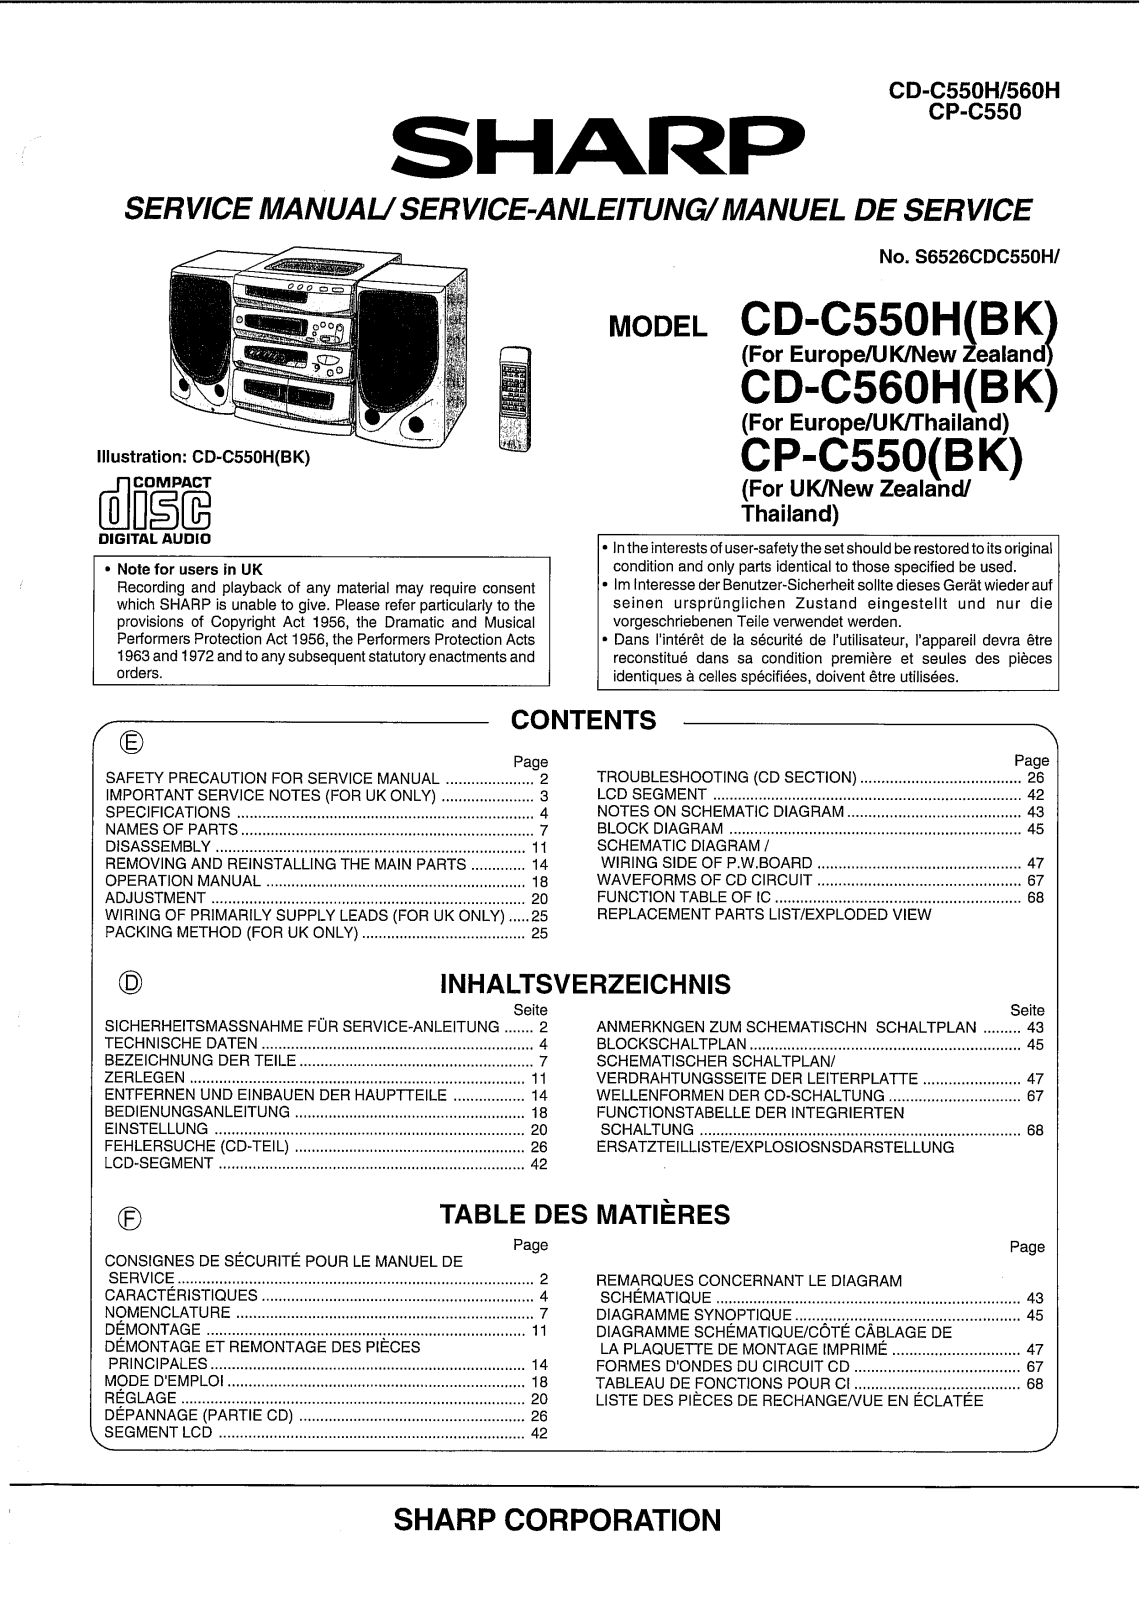 Sharp CDC-560-H, CDC-550-H, CPC-550 Service manual